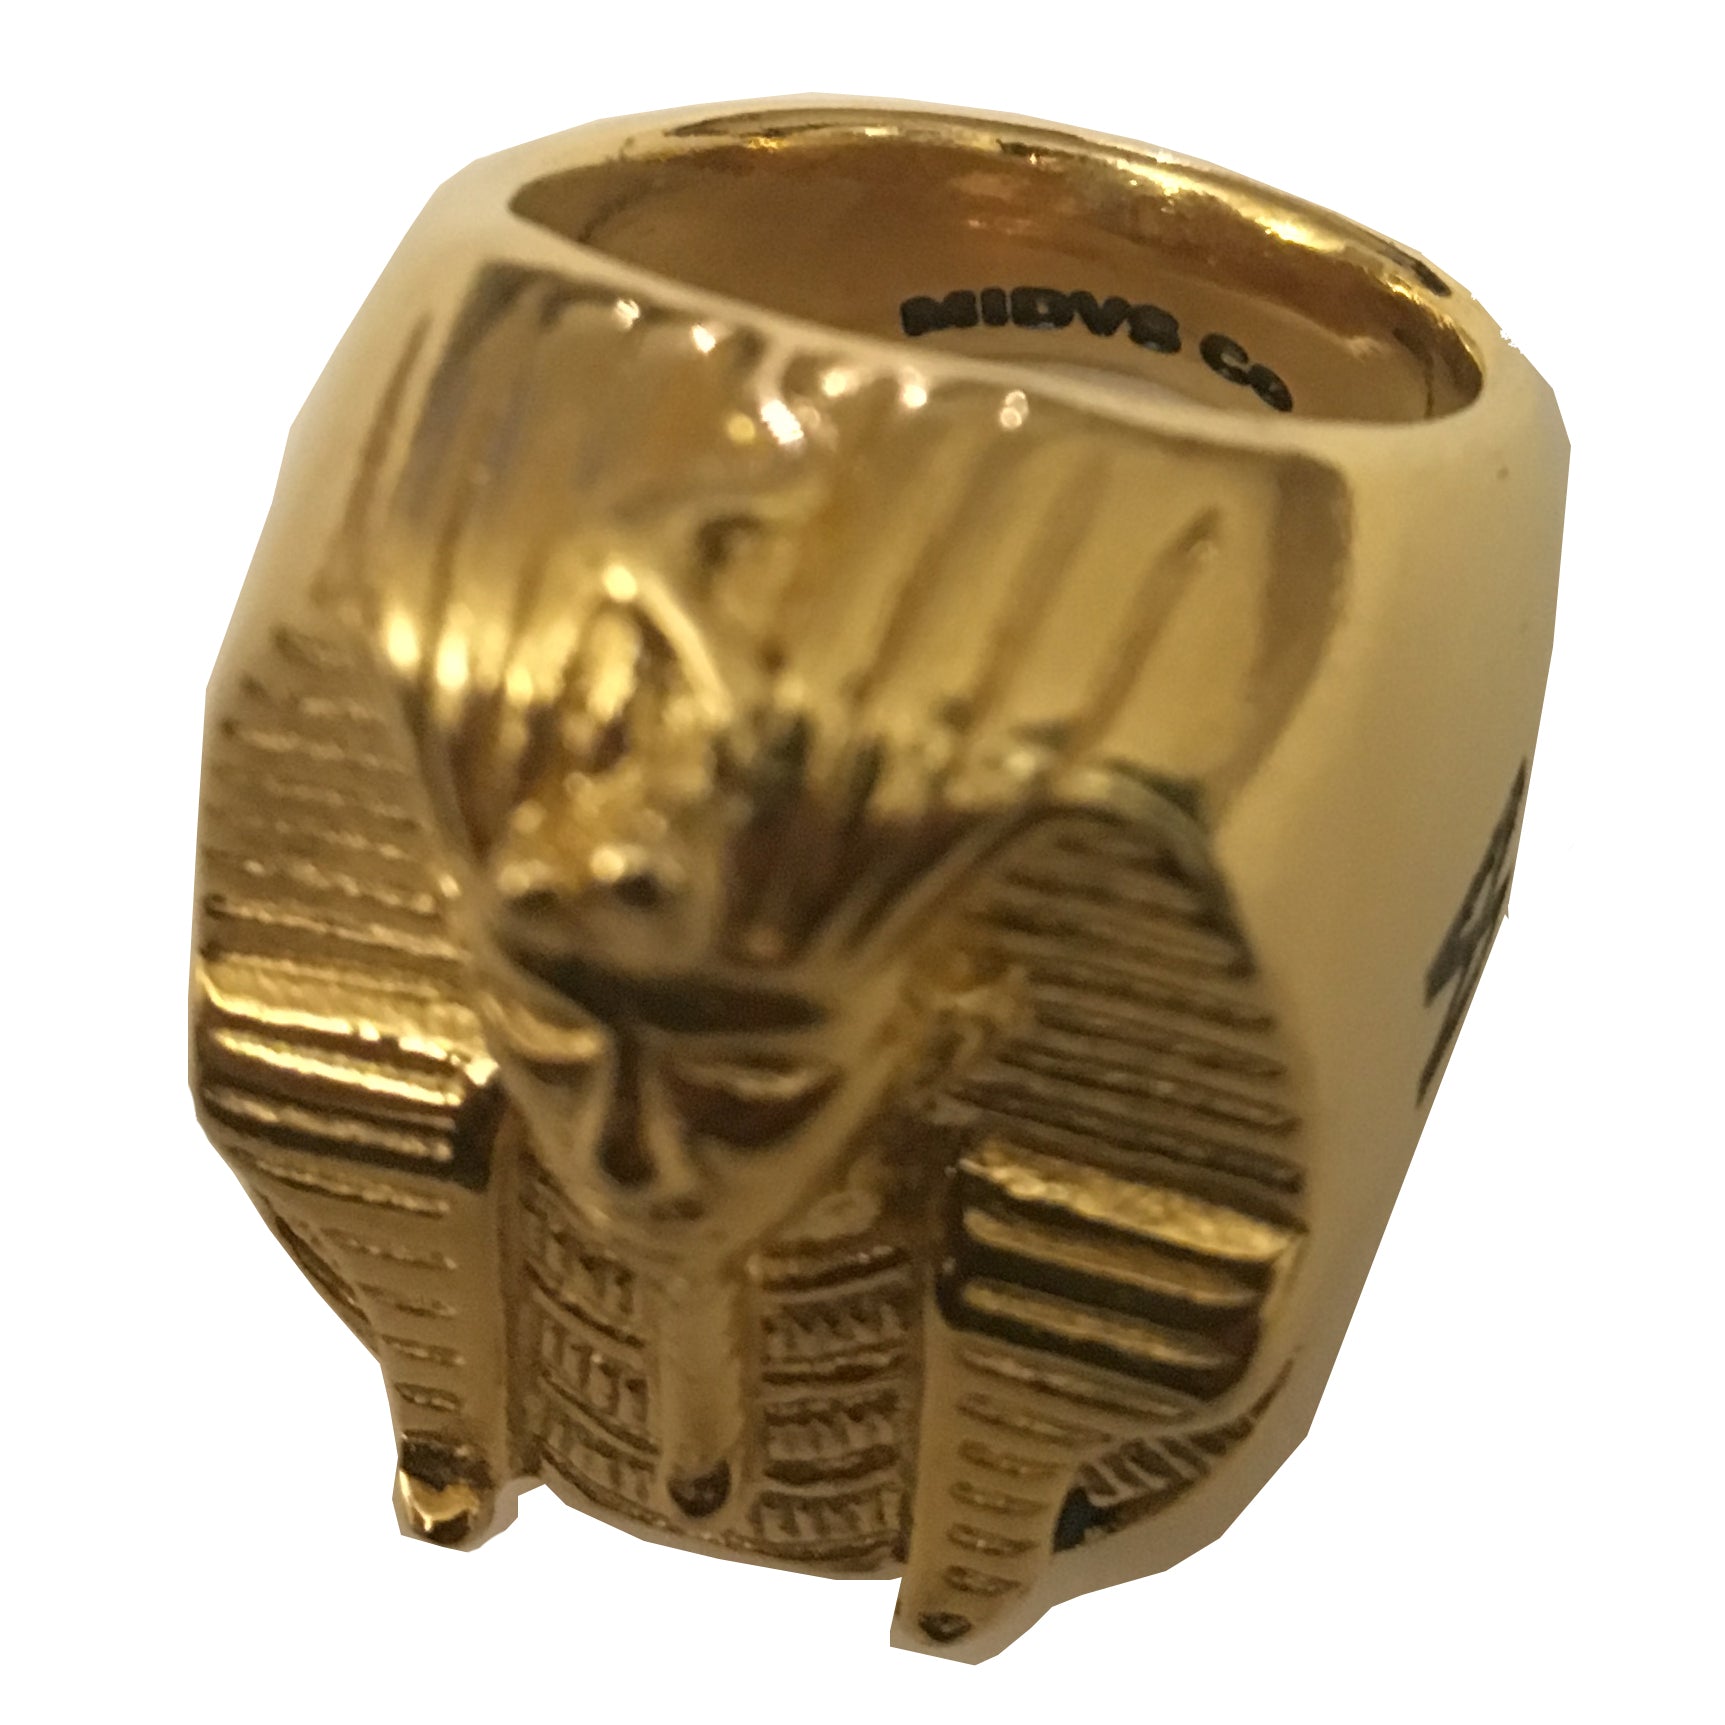 The 'Rulers' Pharoah Head Ring - 18kt Gold